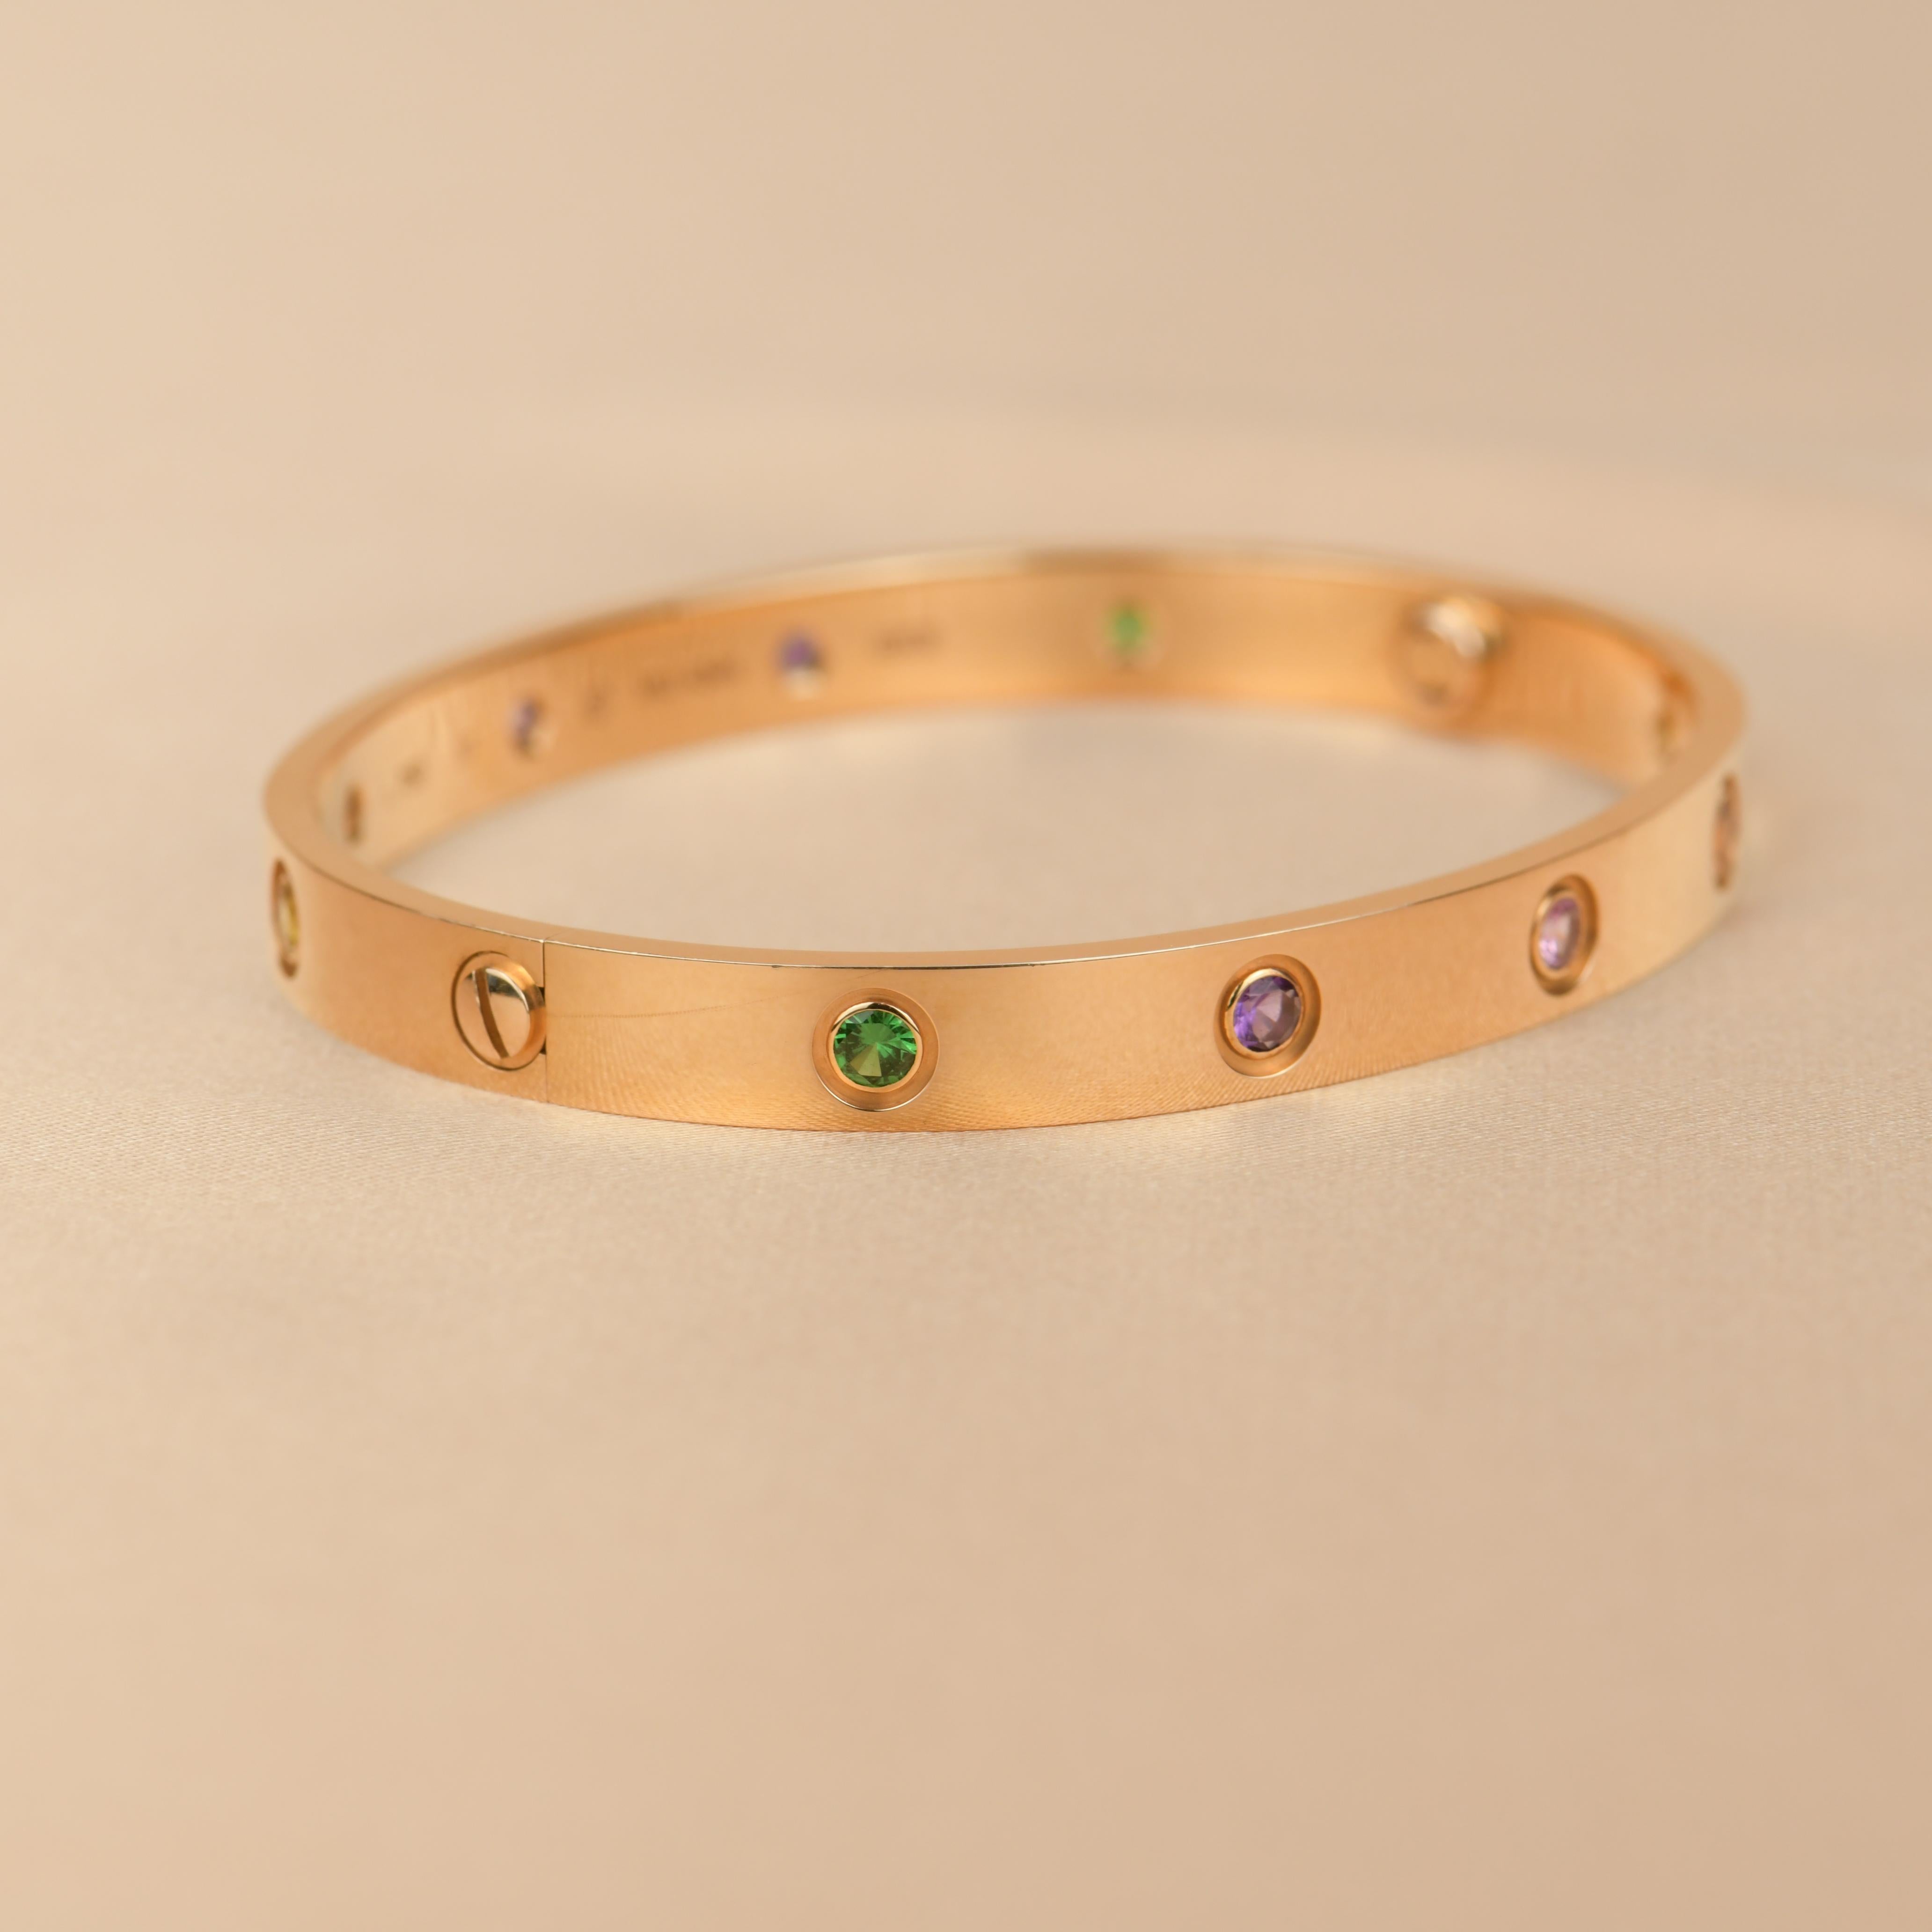 LOVE bracelet, 18K rose gold, set with 2 pink sapphires, 2 yellow sapphires, 2 green garnets, 2 orange garnets, and 2 amethysts. 
_____________________________________________________________
Dandelion Antiques Code AT-1242
Brand Cartier
Model